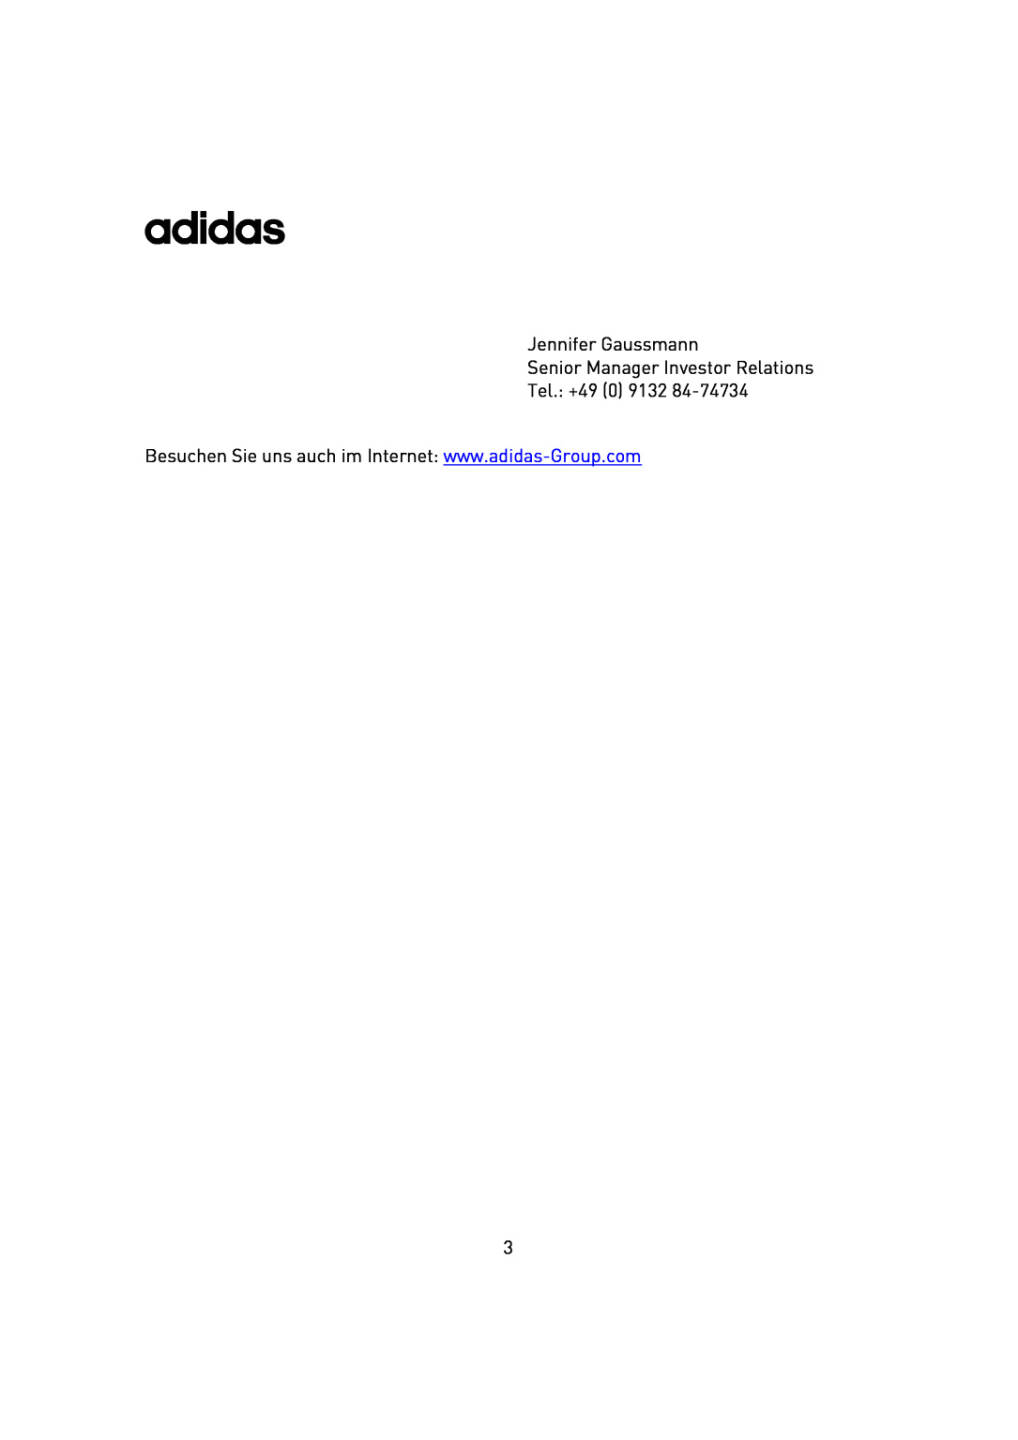 adidas: Harm Ohlmeyer neuer CFO, Seite 3/3, komplettes Dokument unter http://boerse-social.com/static/uploads/file_2143_adidas_harm_ohlmeyer_neuer_cfo.pdf